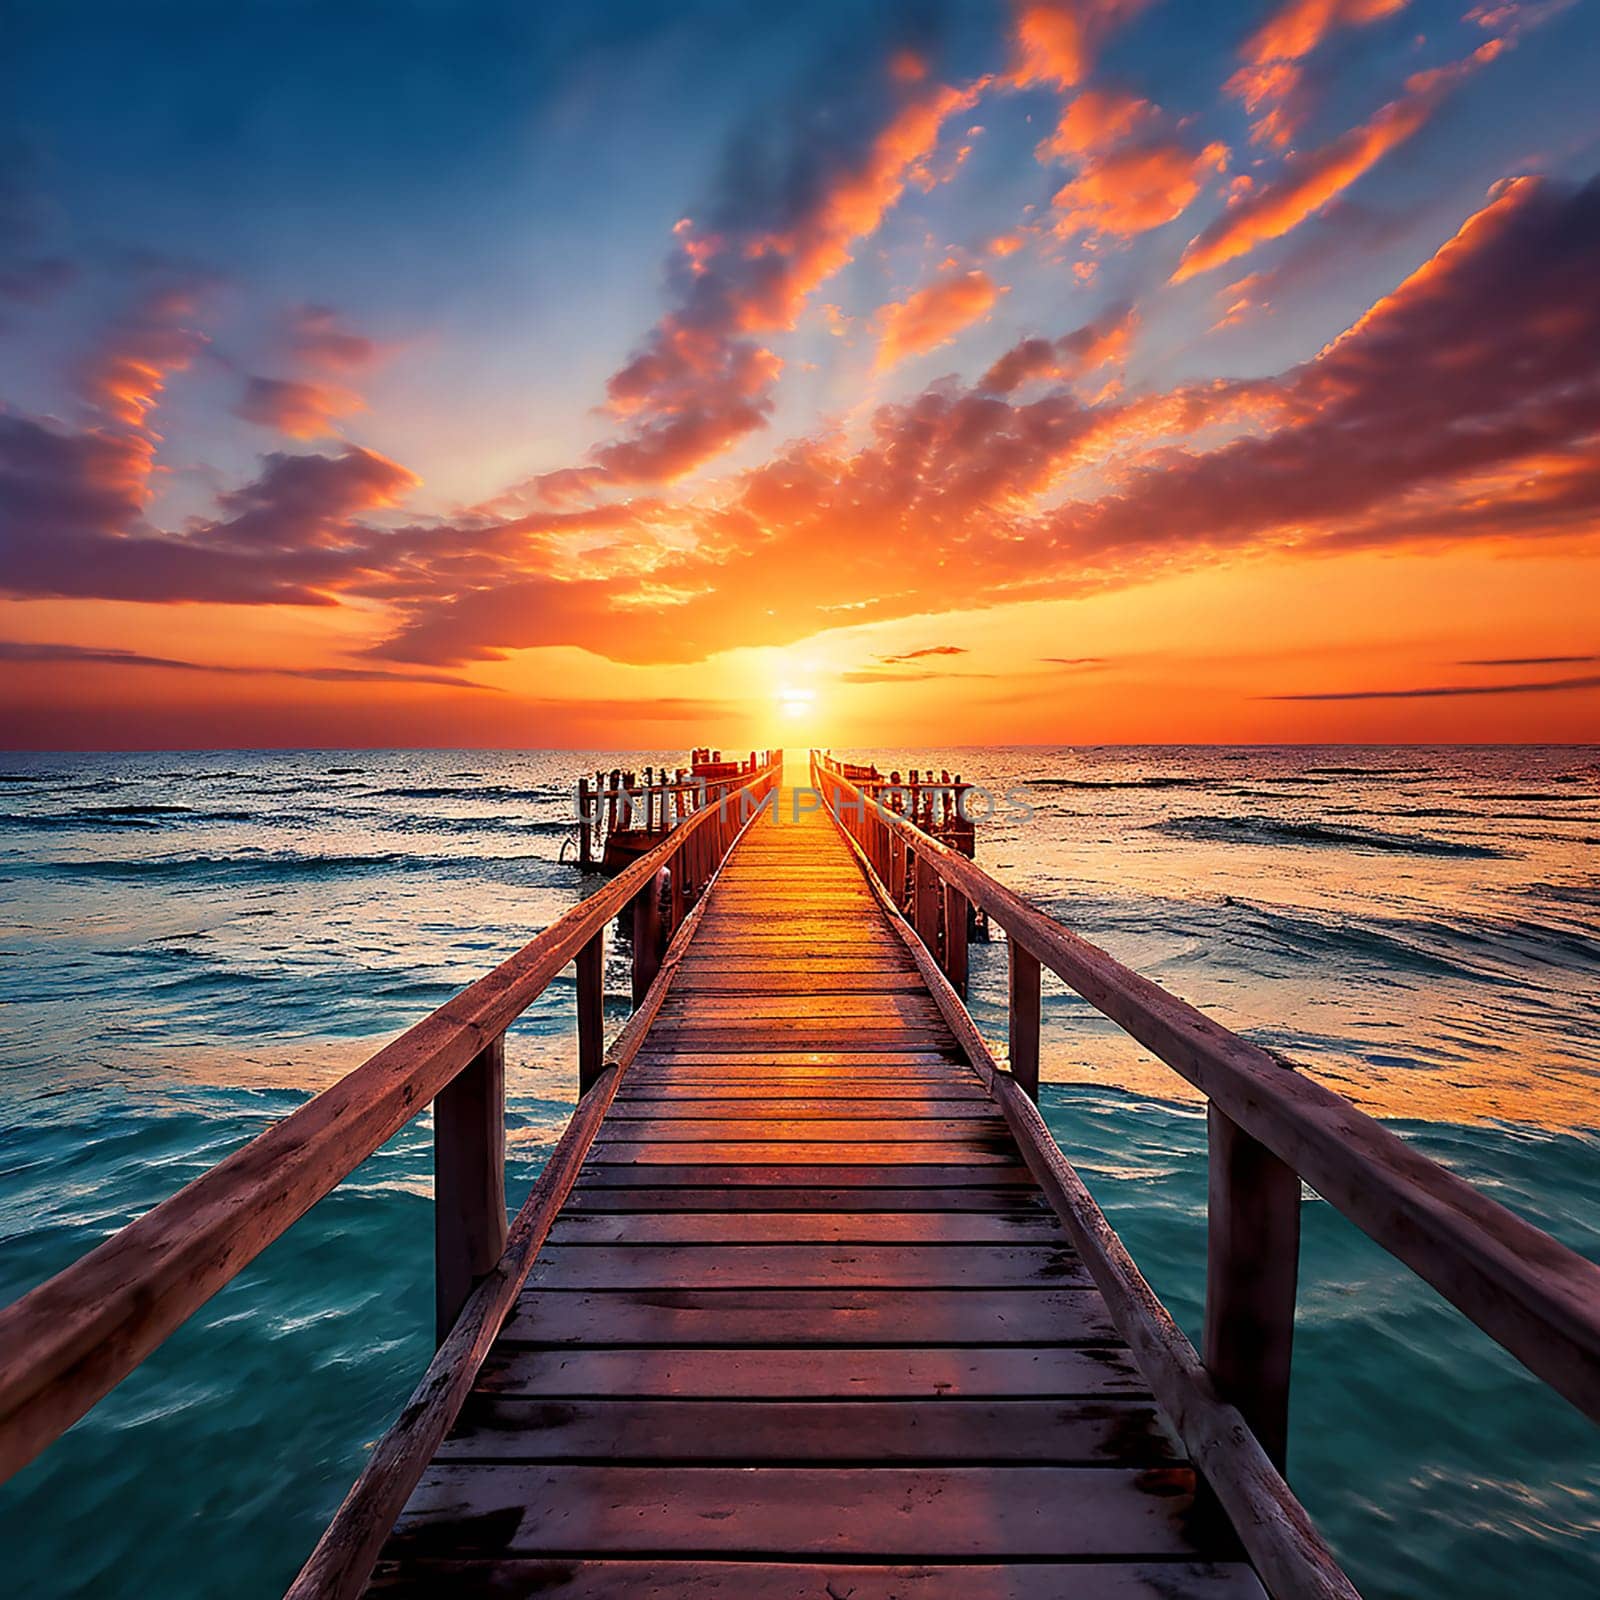 Serene Sunset: Calm Meditation on the Beach Footbridge